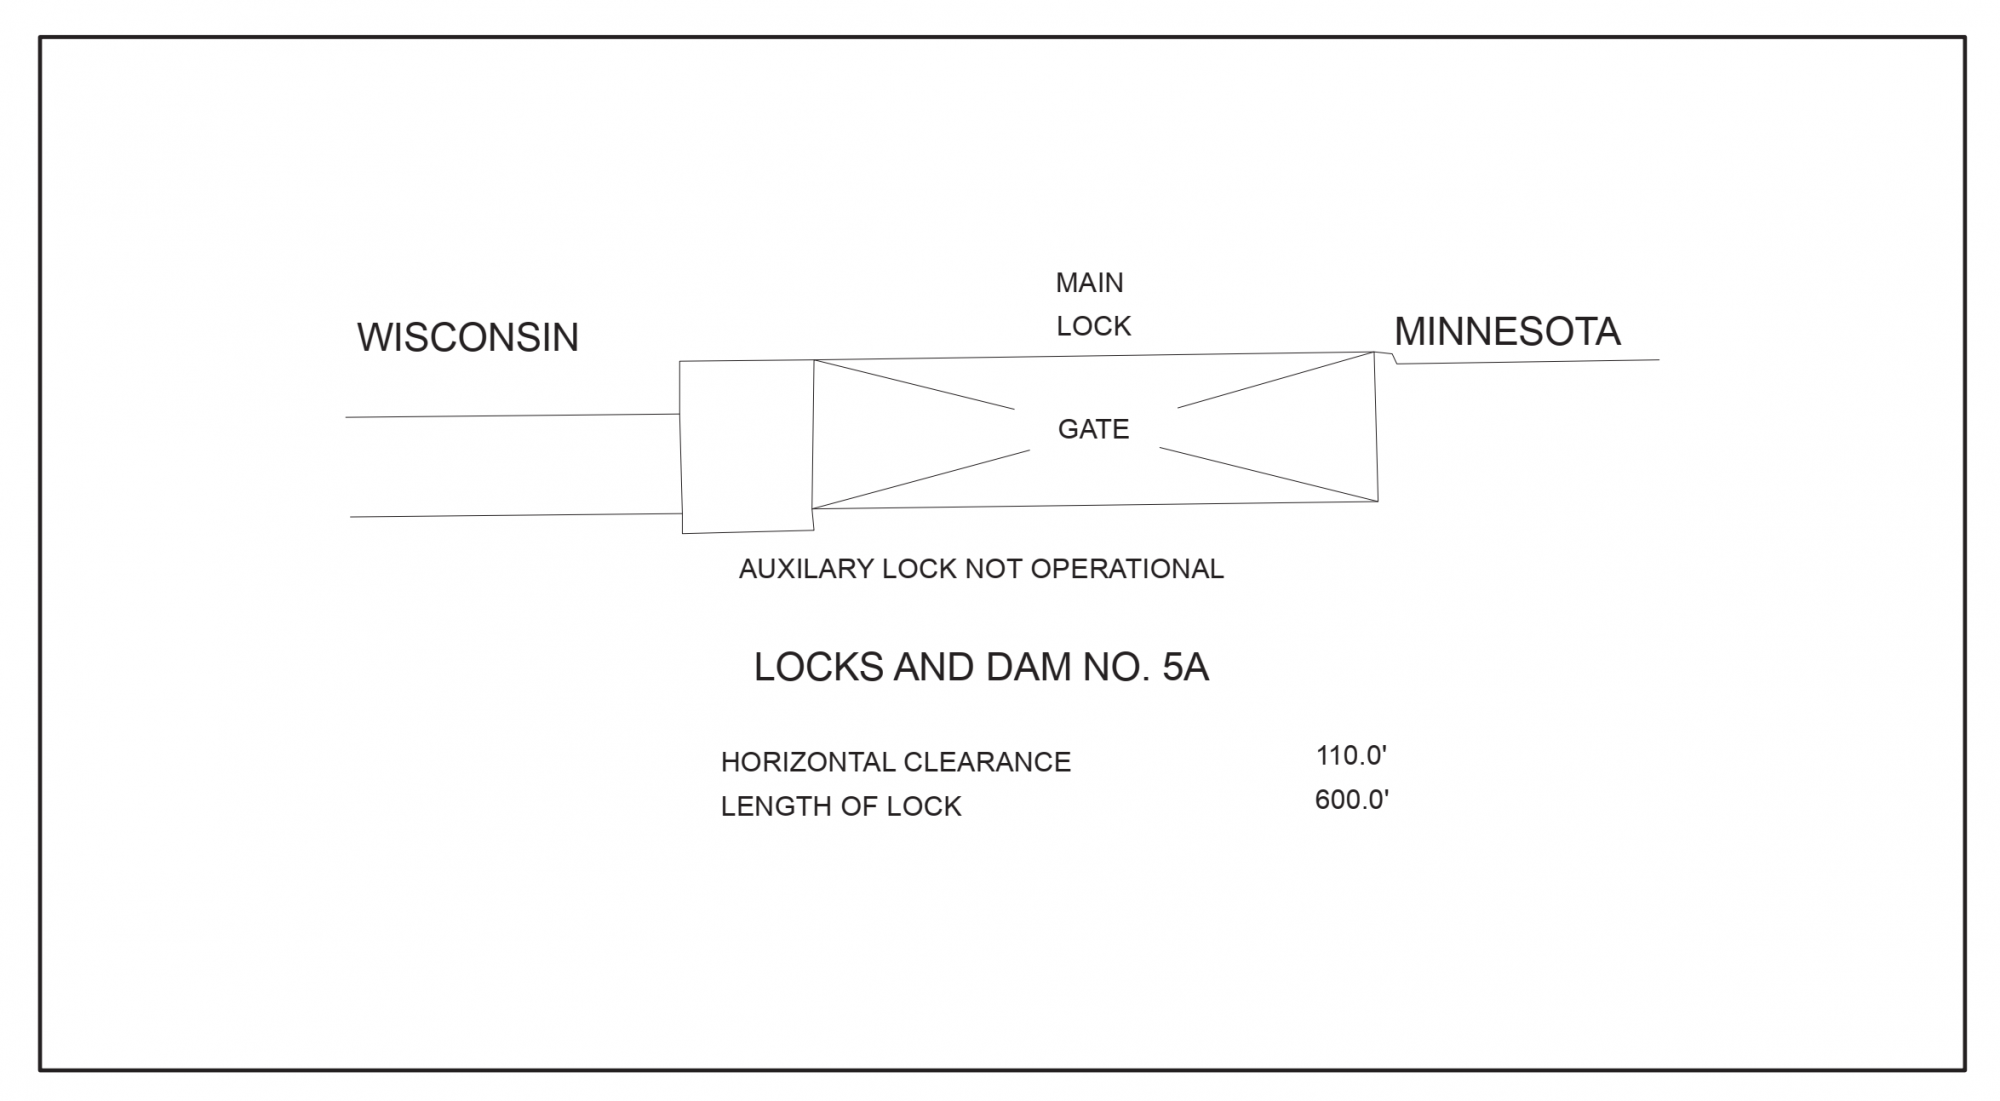 Winona Lock And Dam No. 5A Clearances | Bridge Calculator LLC